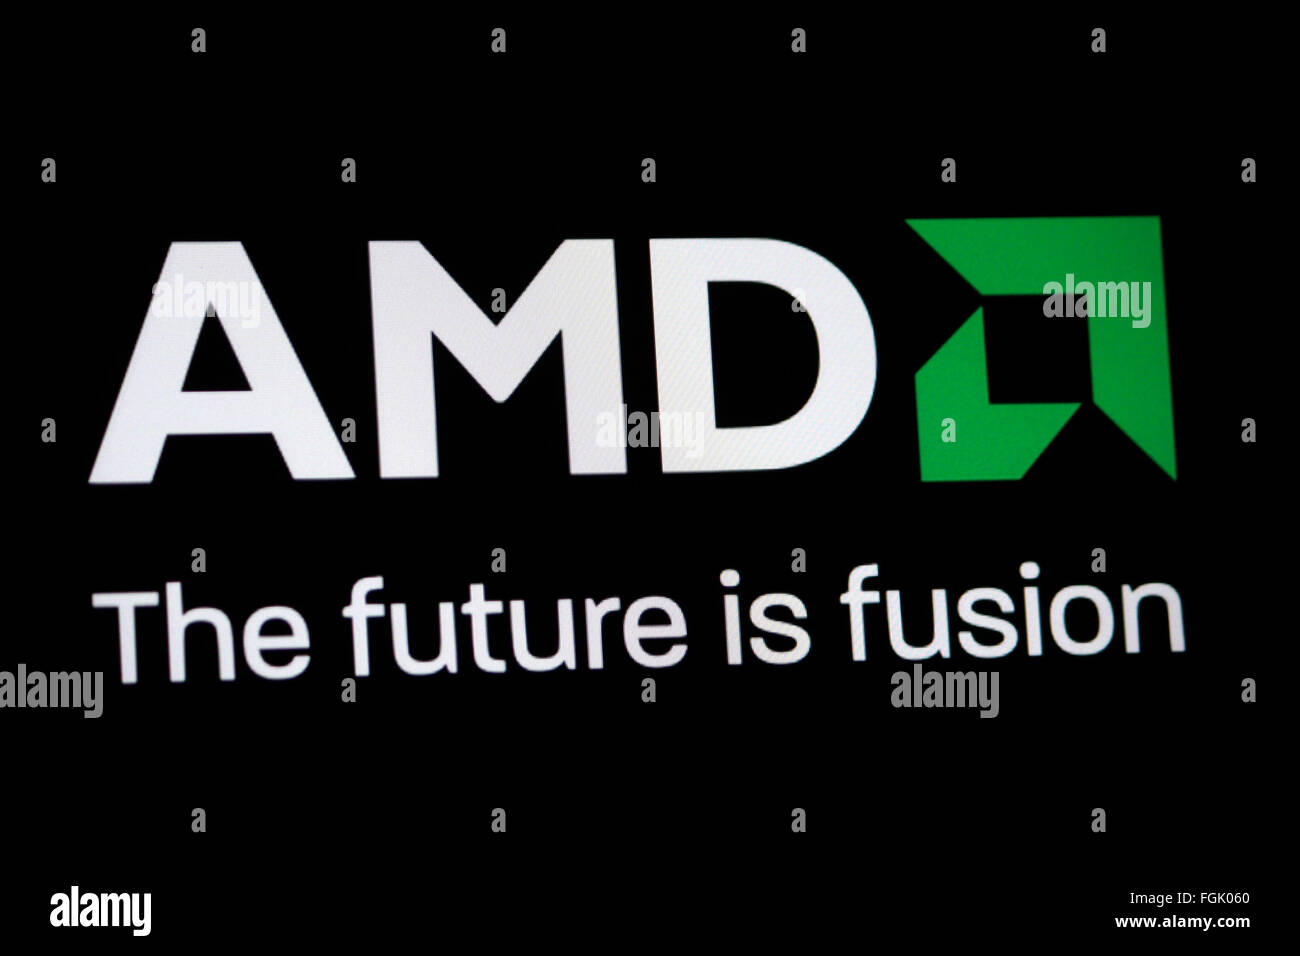 Markenname: "AMD", Berlin. Stockfoto